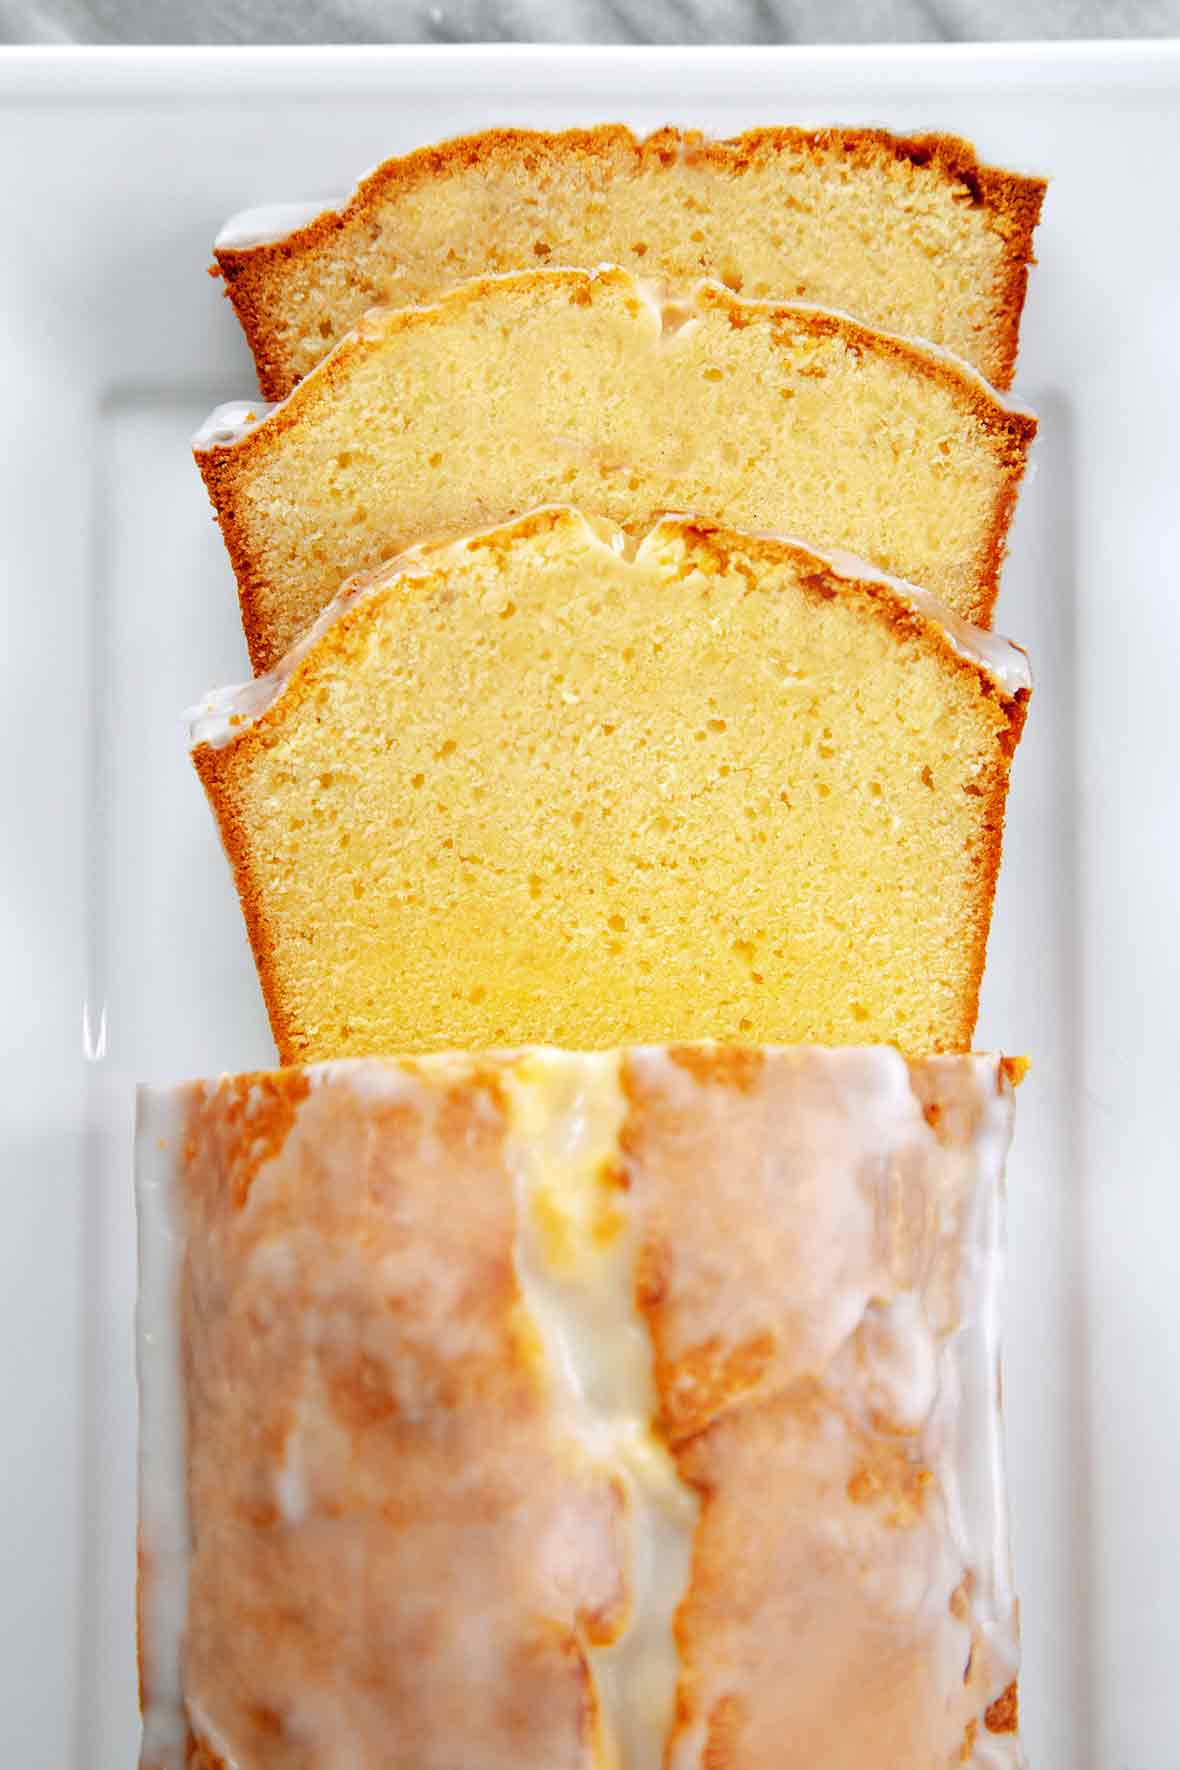 A cream cheese pound cake with a lemon glaze